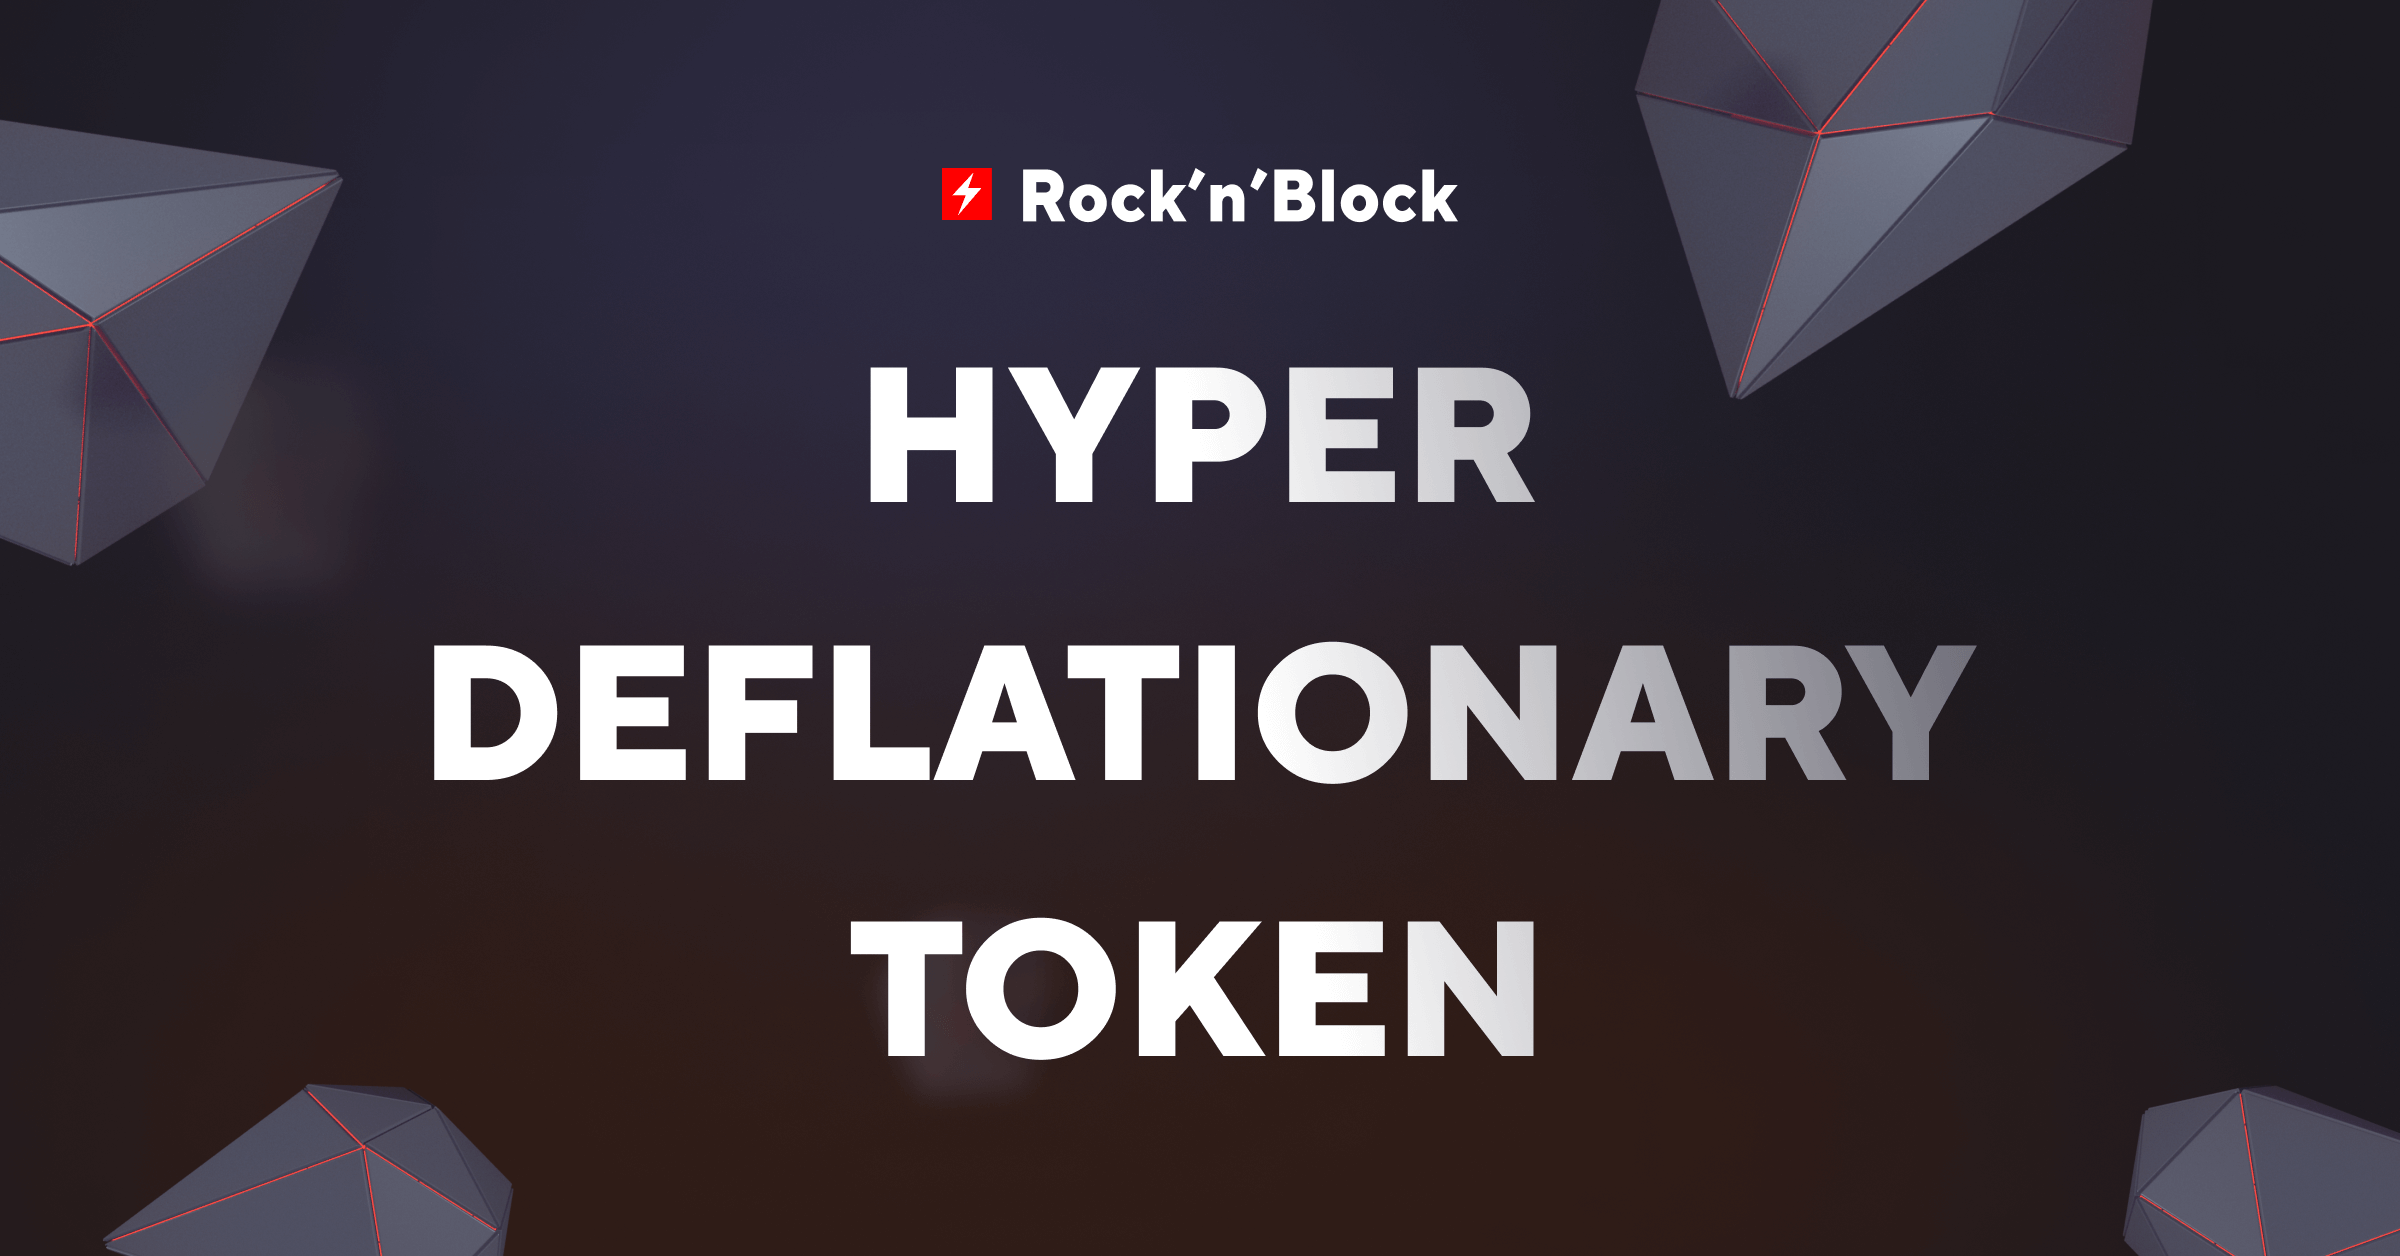 Rock'n'Block blockchain software developers are explaining the mechanics of hyperdeflationary tokens